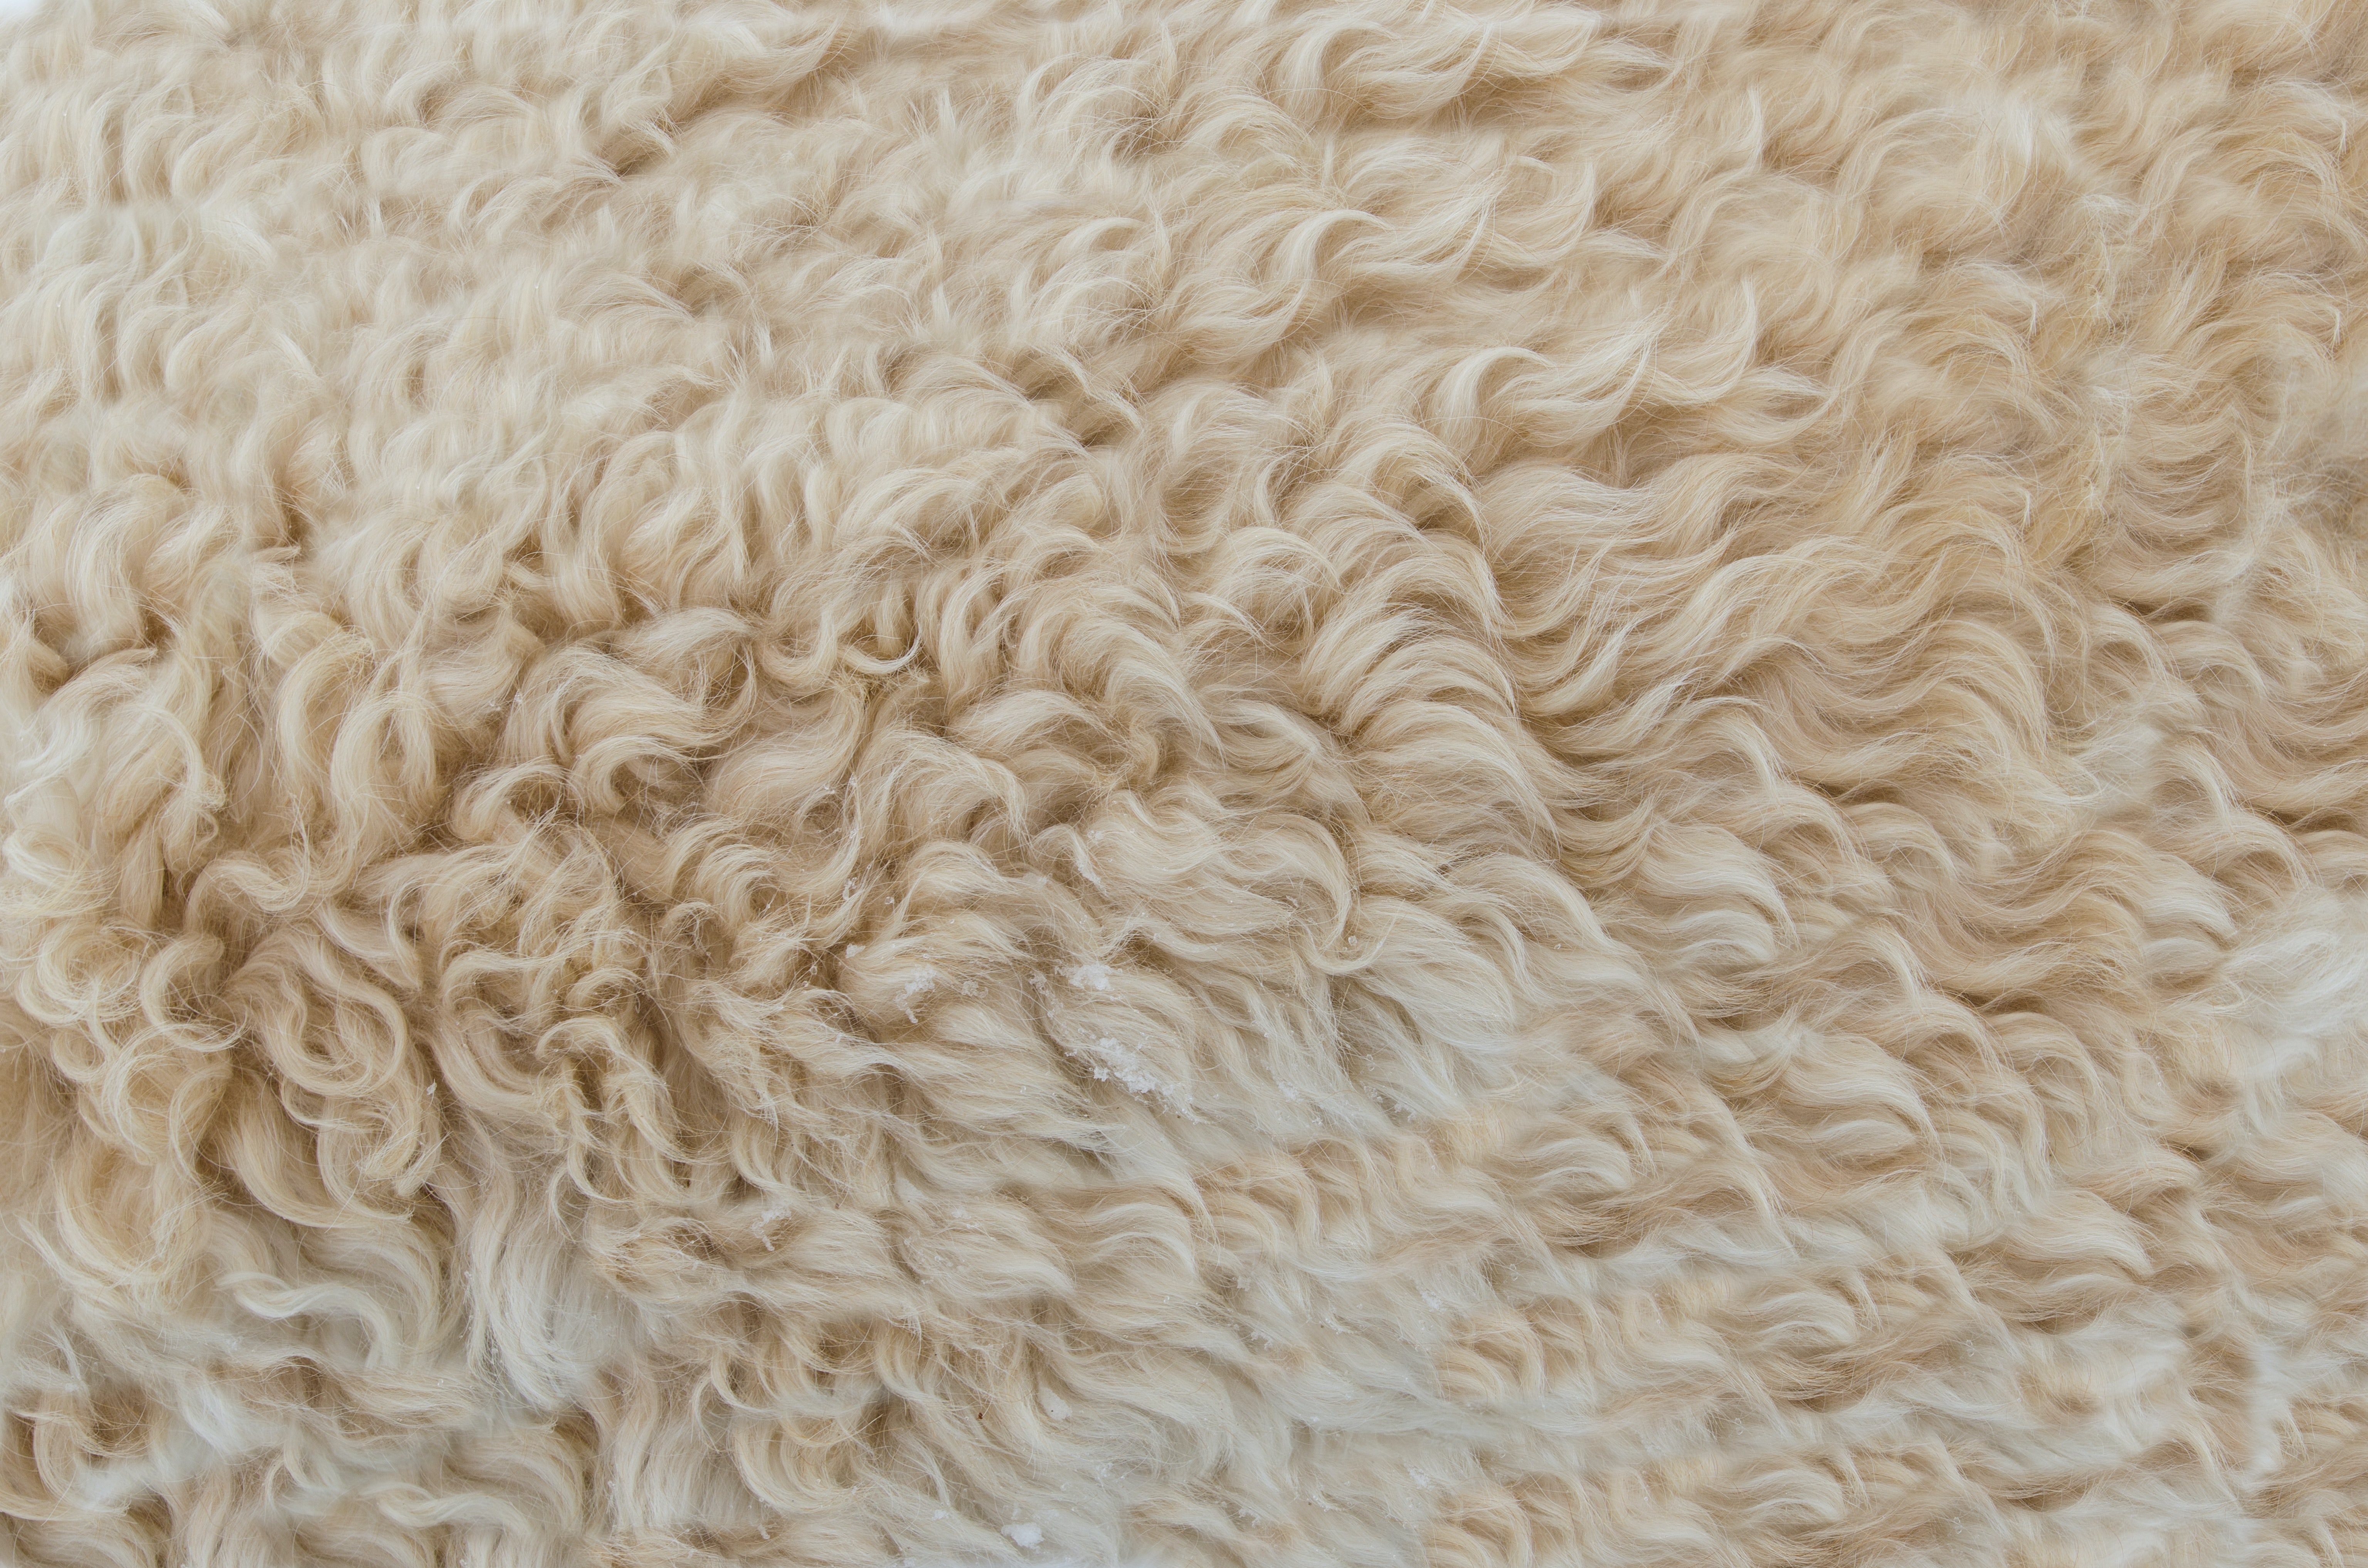 A close up of a beige fur rug